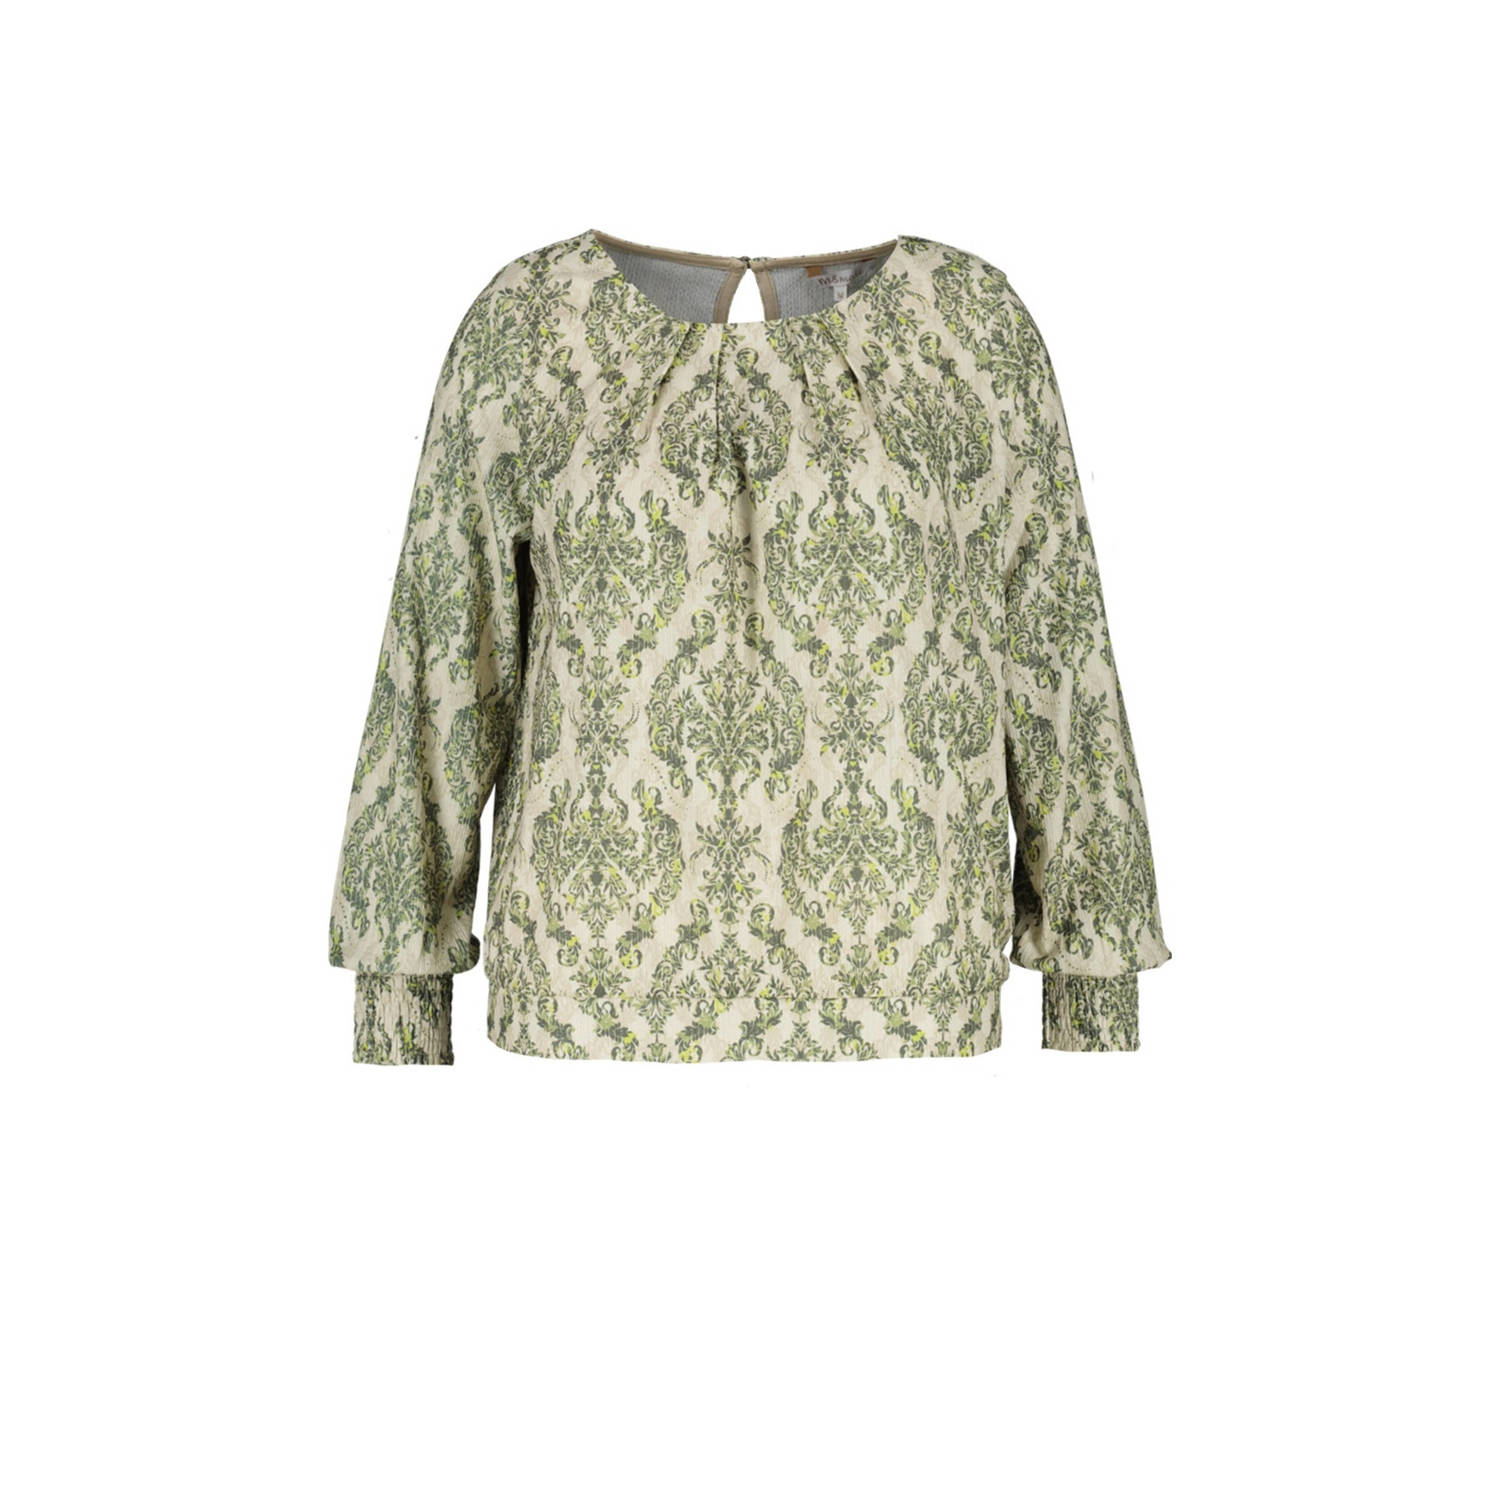 MS Mode blousetop met paisleyprint groen limegroen beige